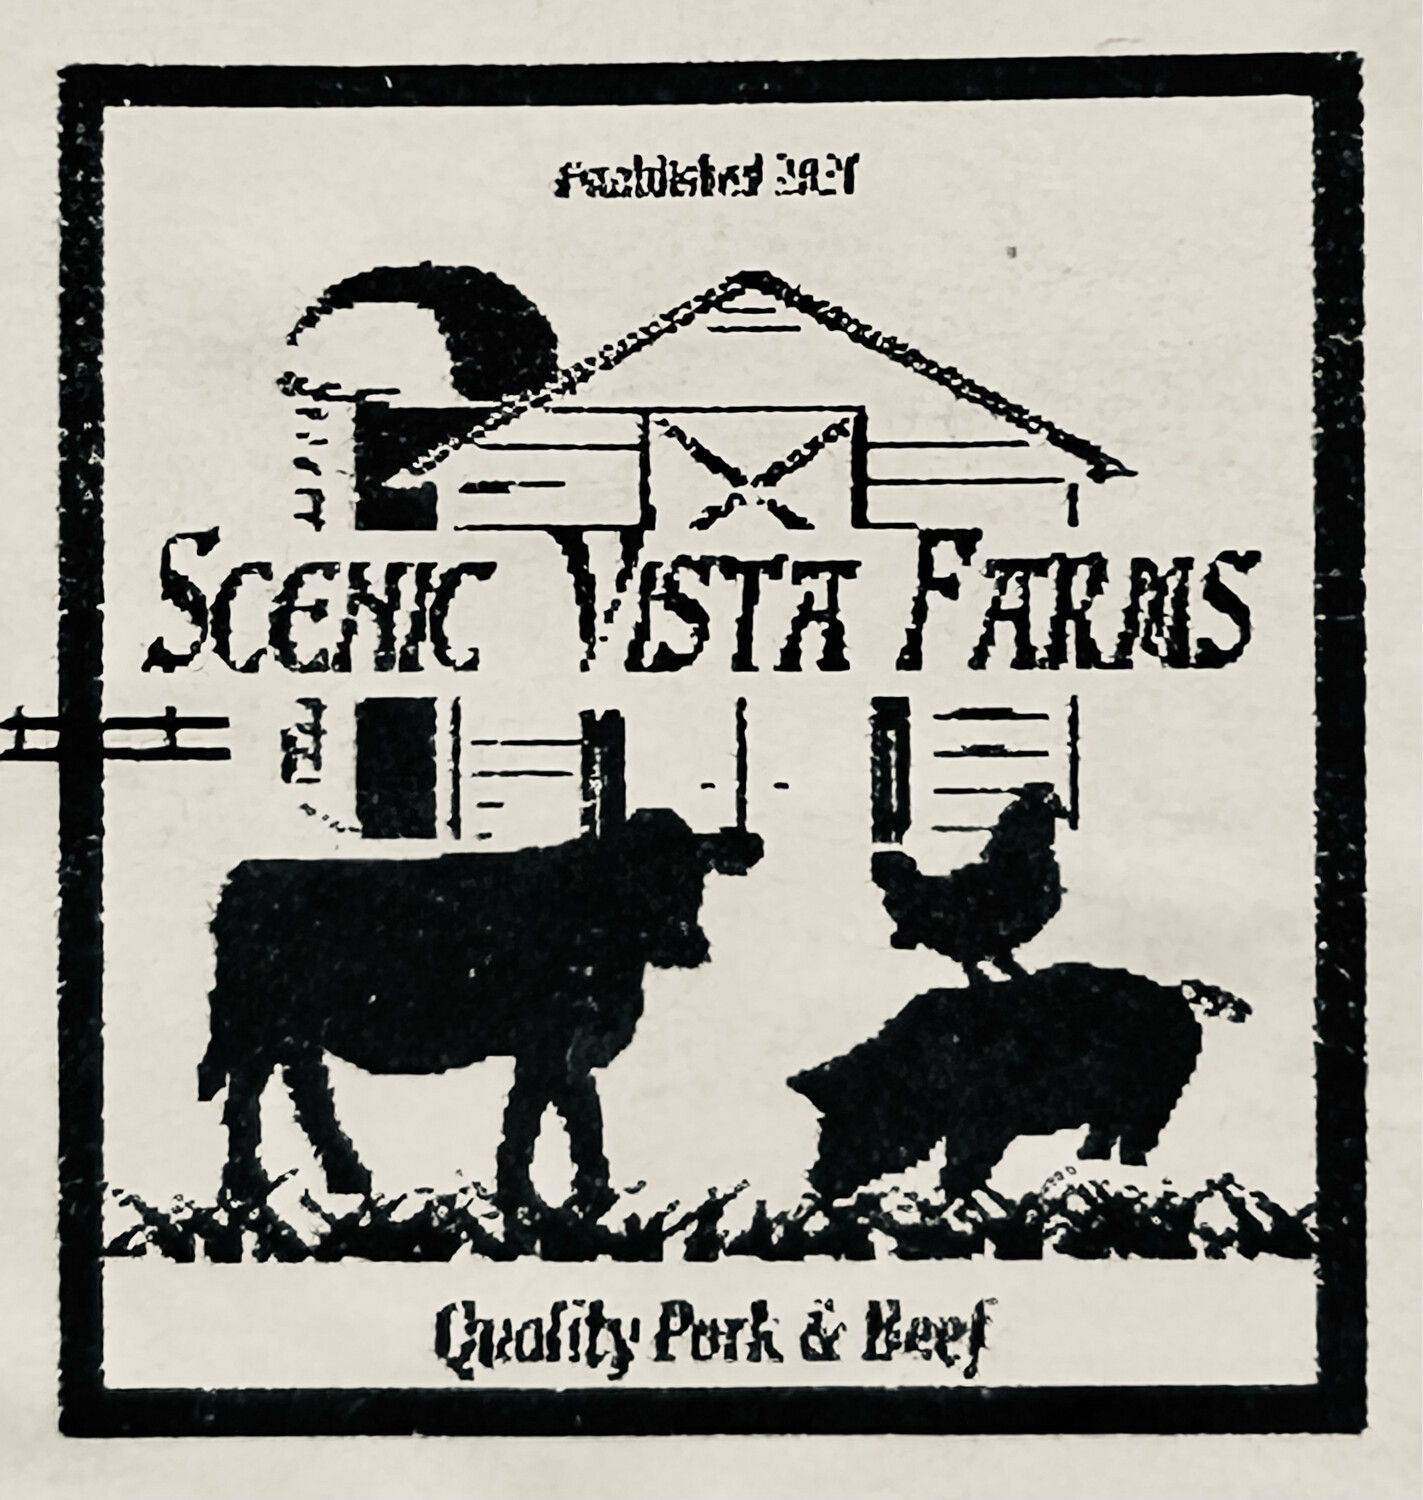 SV Farms Cube Steak @$7.99/lb